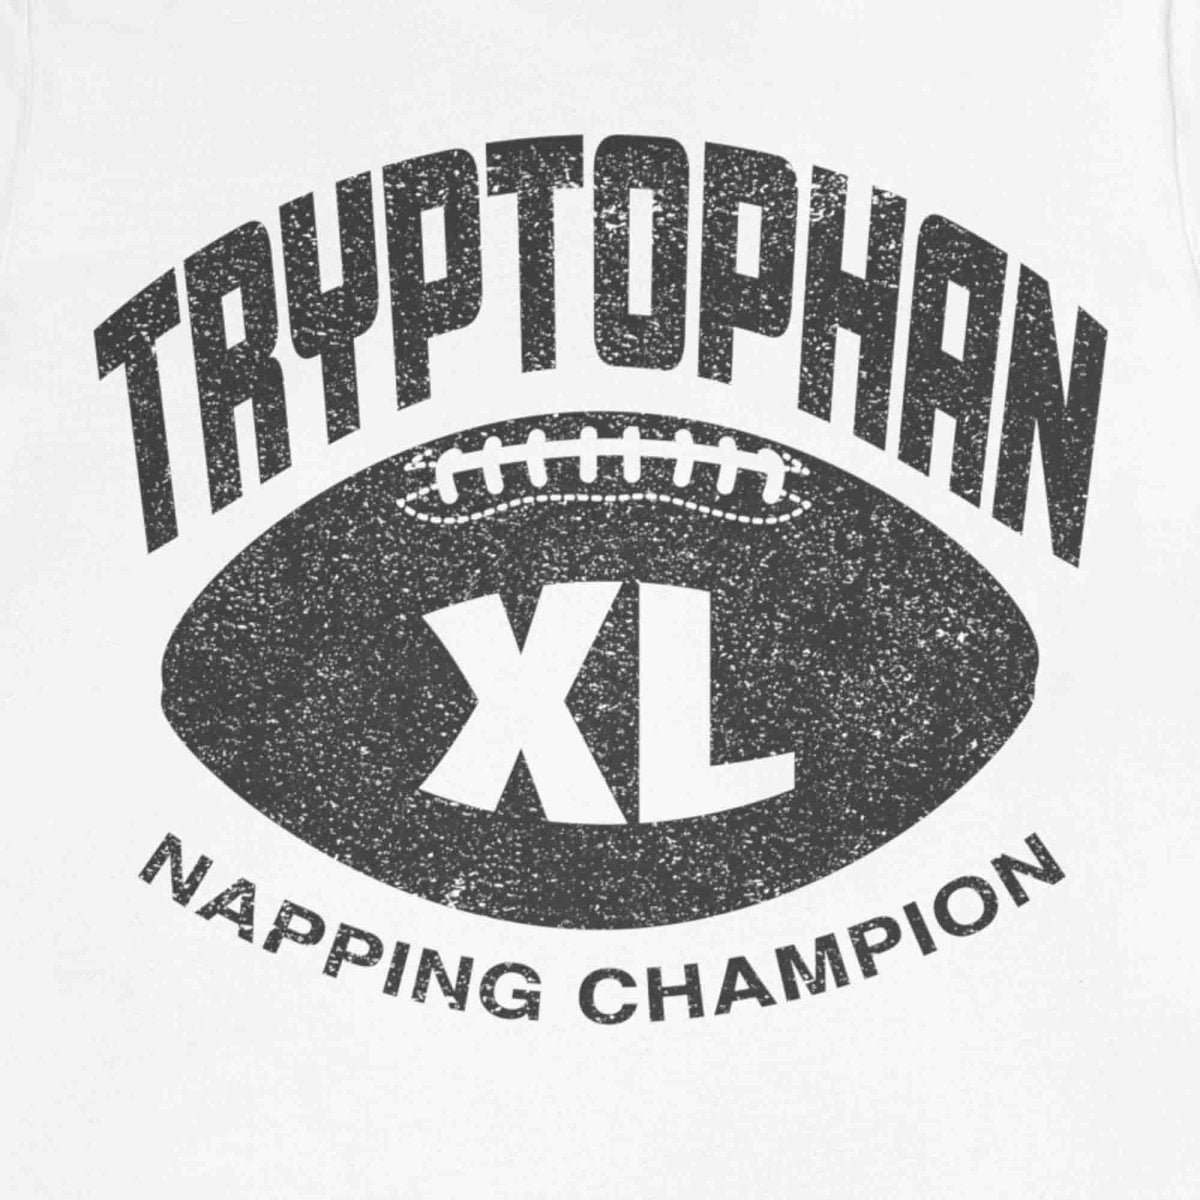 Thanksgiving Funny Premium T-Shirt, Football, Turkey, Tryptophan, Napping